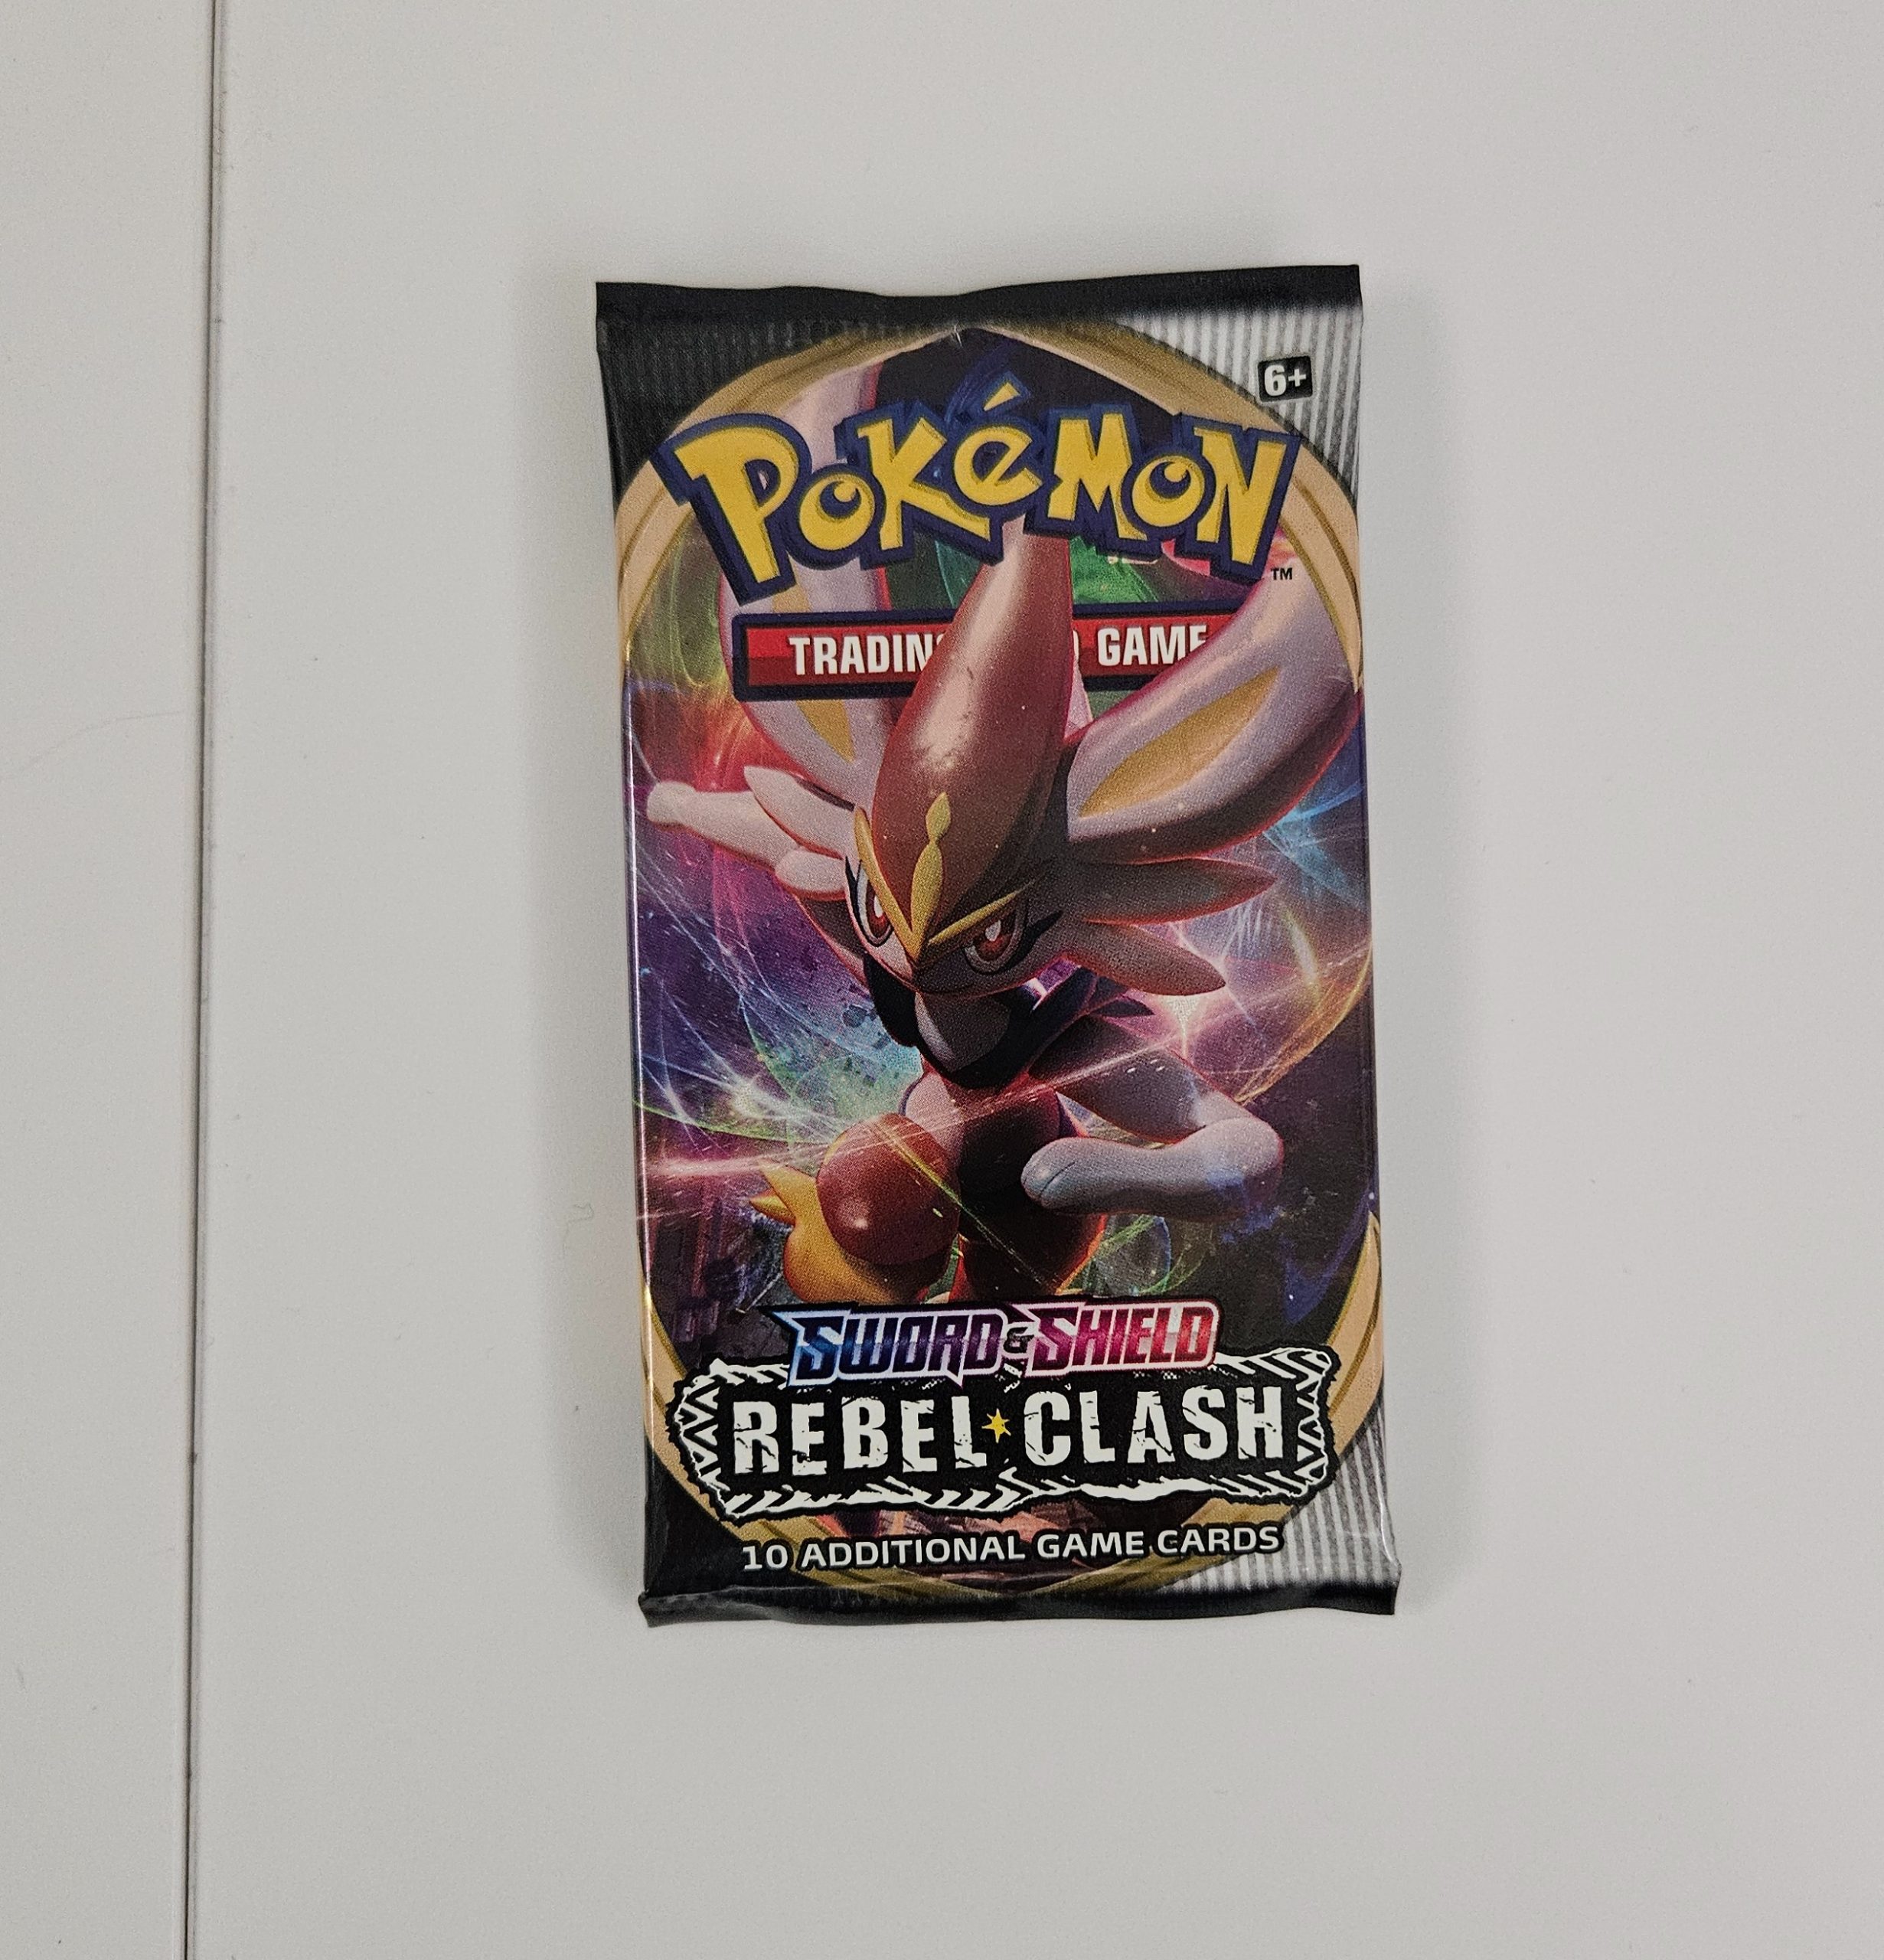 Rebel clash booster pack